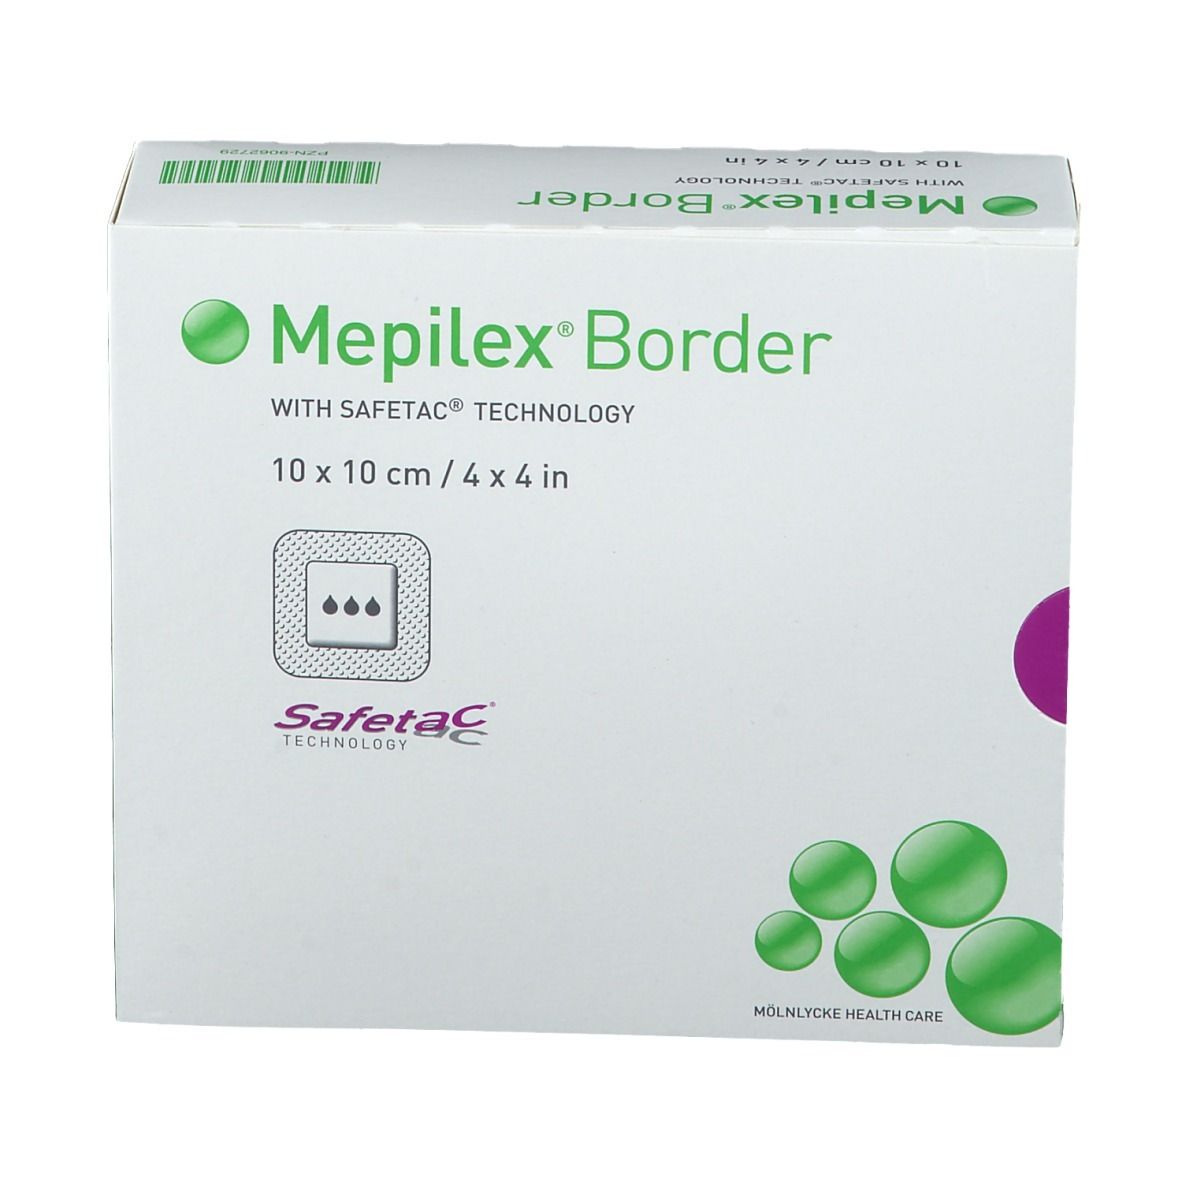 Mepilex® Border Schaumverband 10 x 10 cm